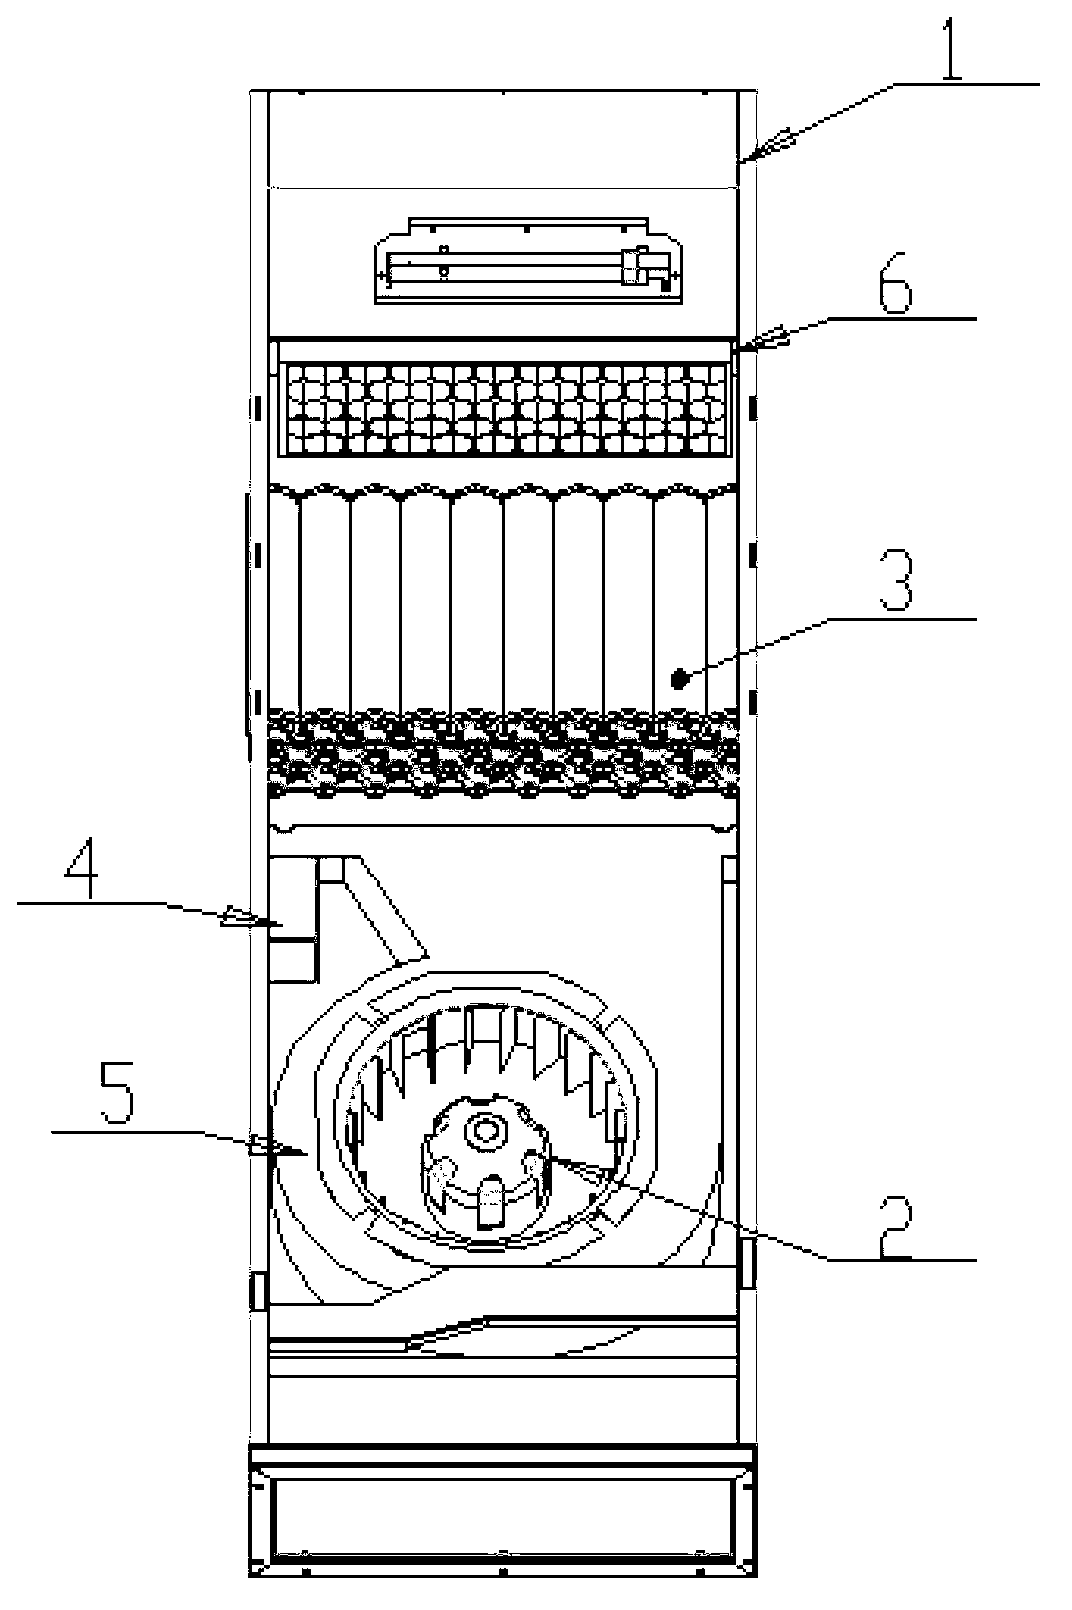 Plasma air disinfection machine